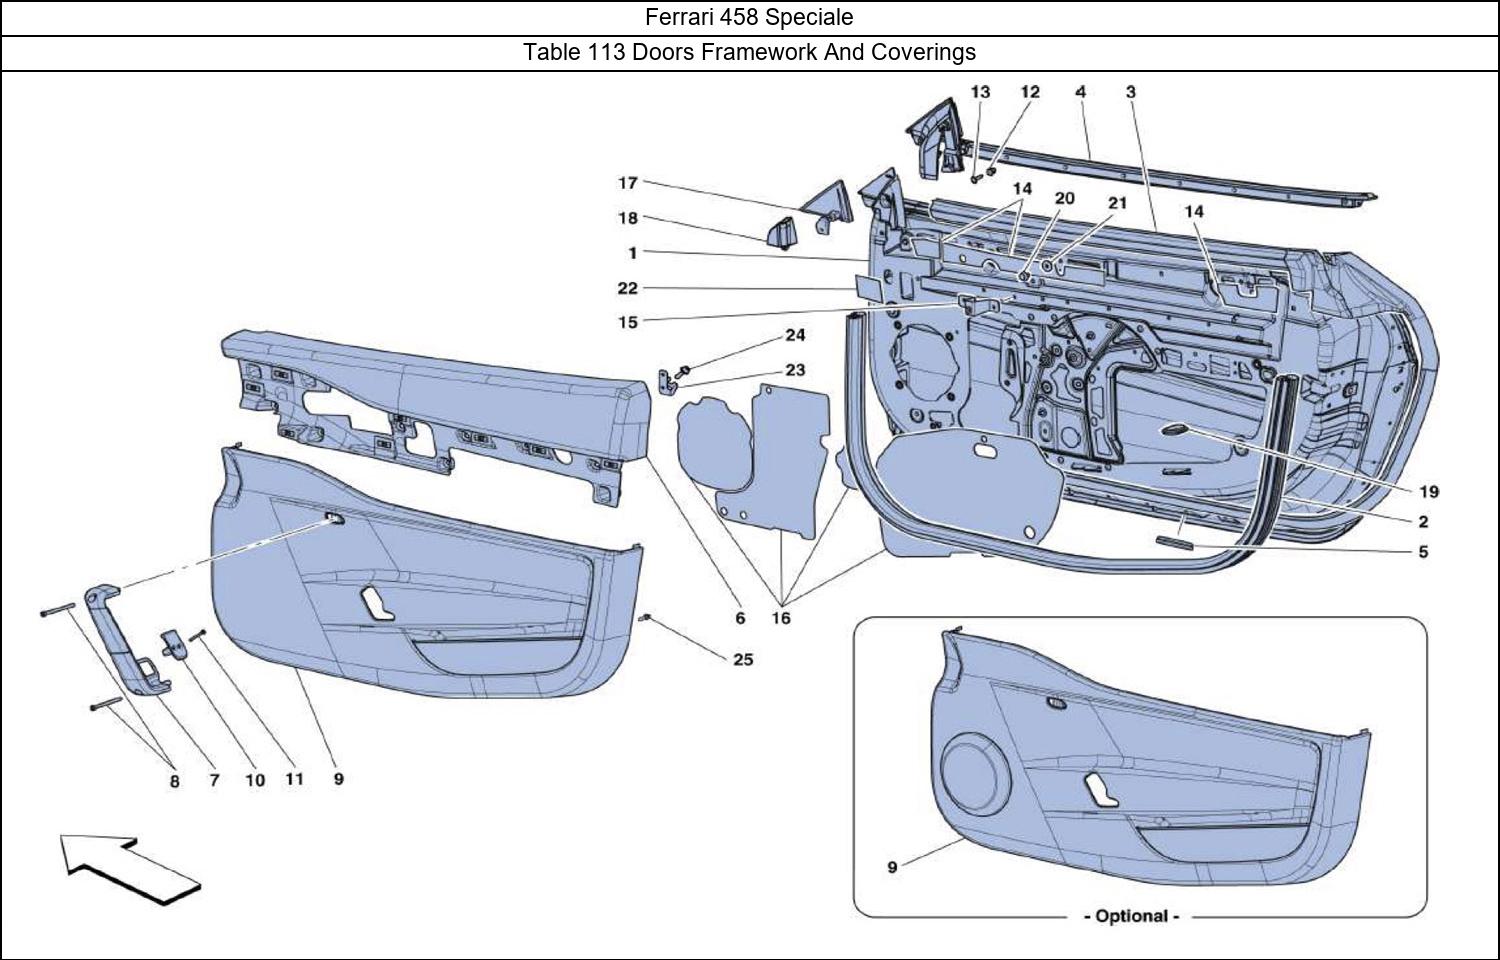 Ferrari Parts Ferrari 458 Speciale Table 113 Doors Framework And Coverings